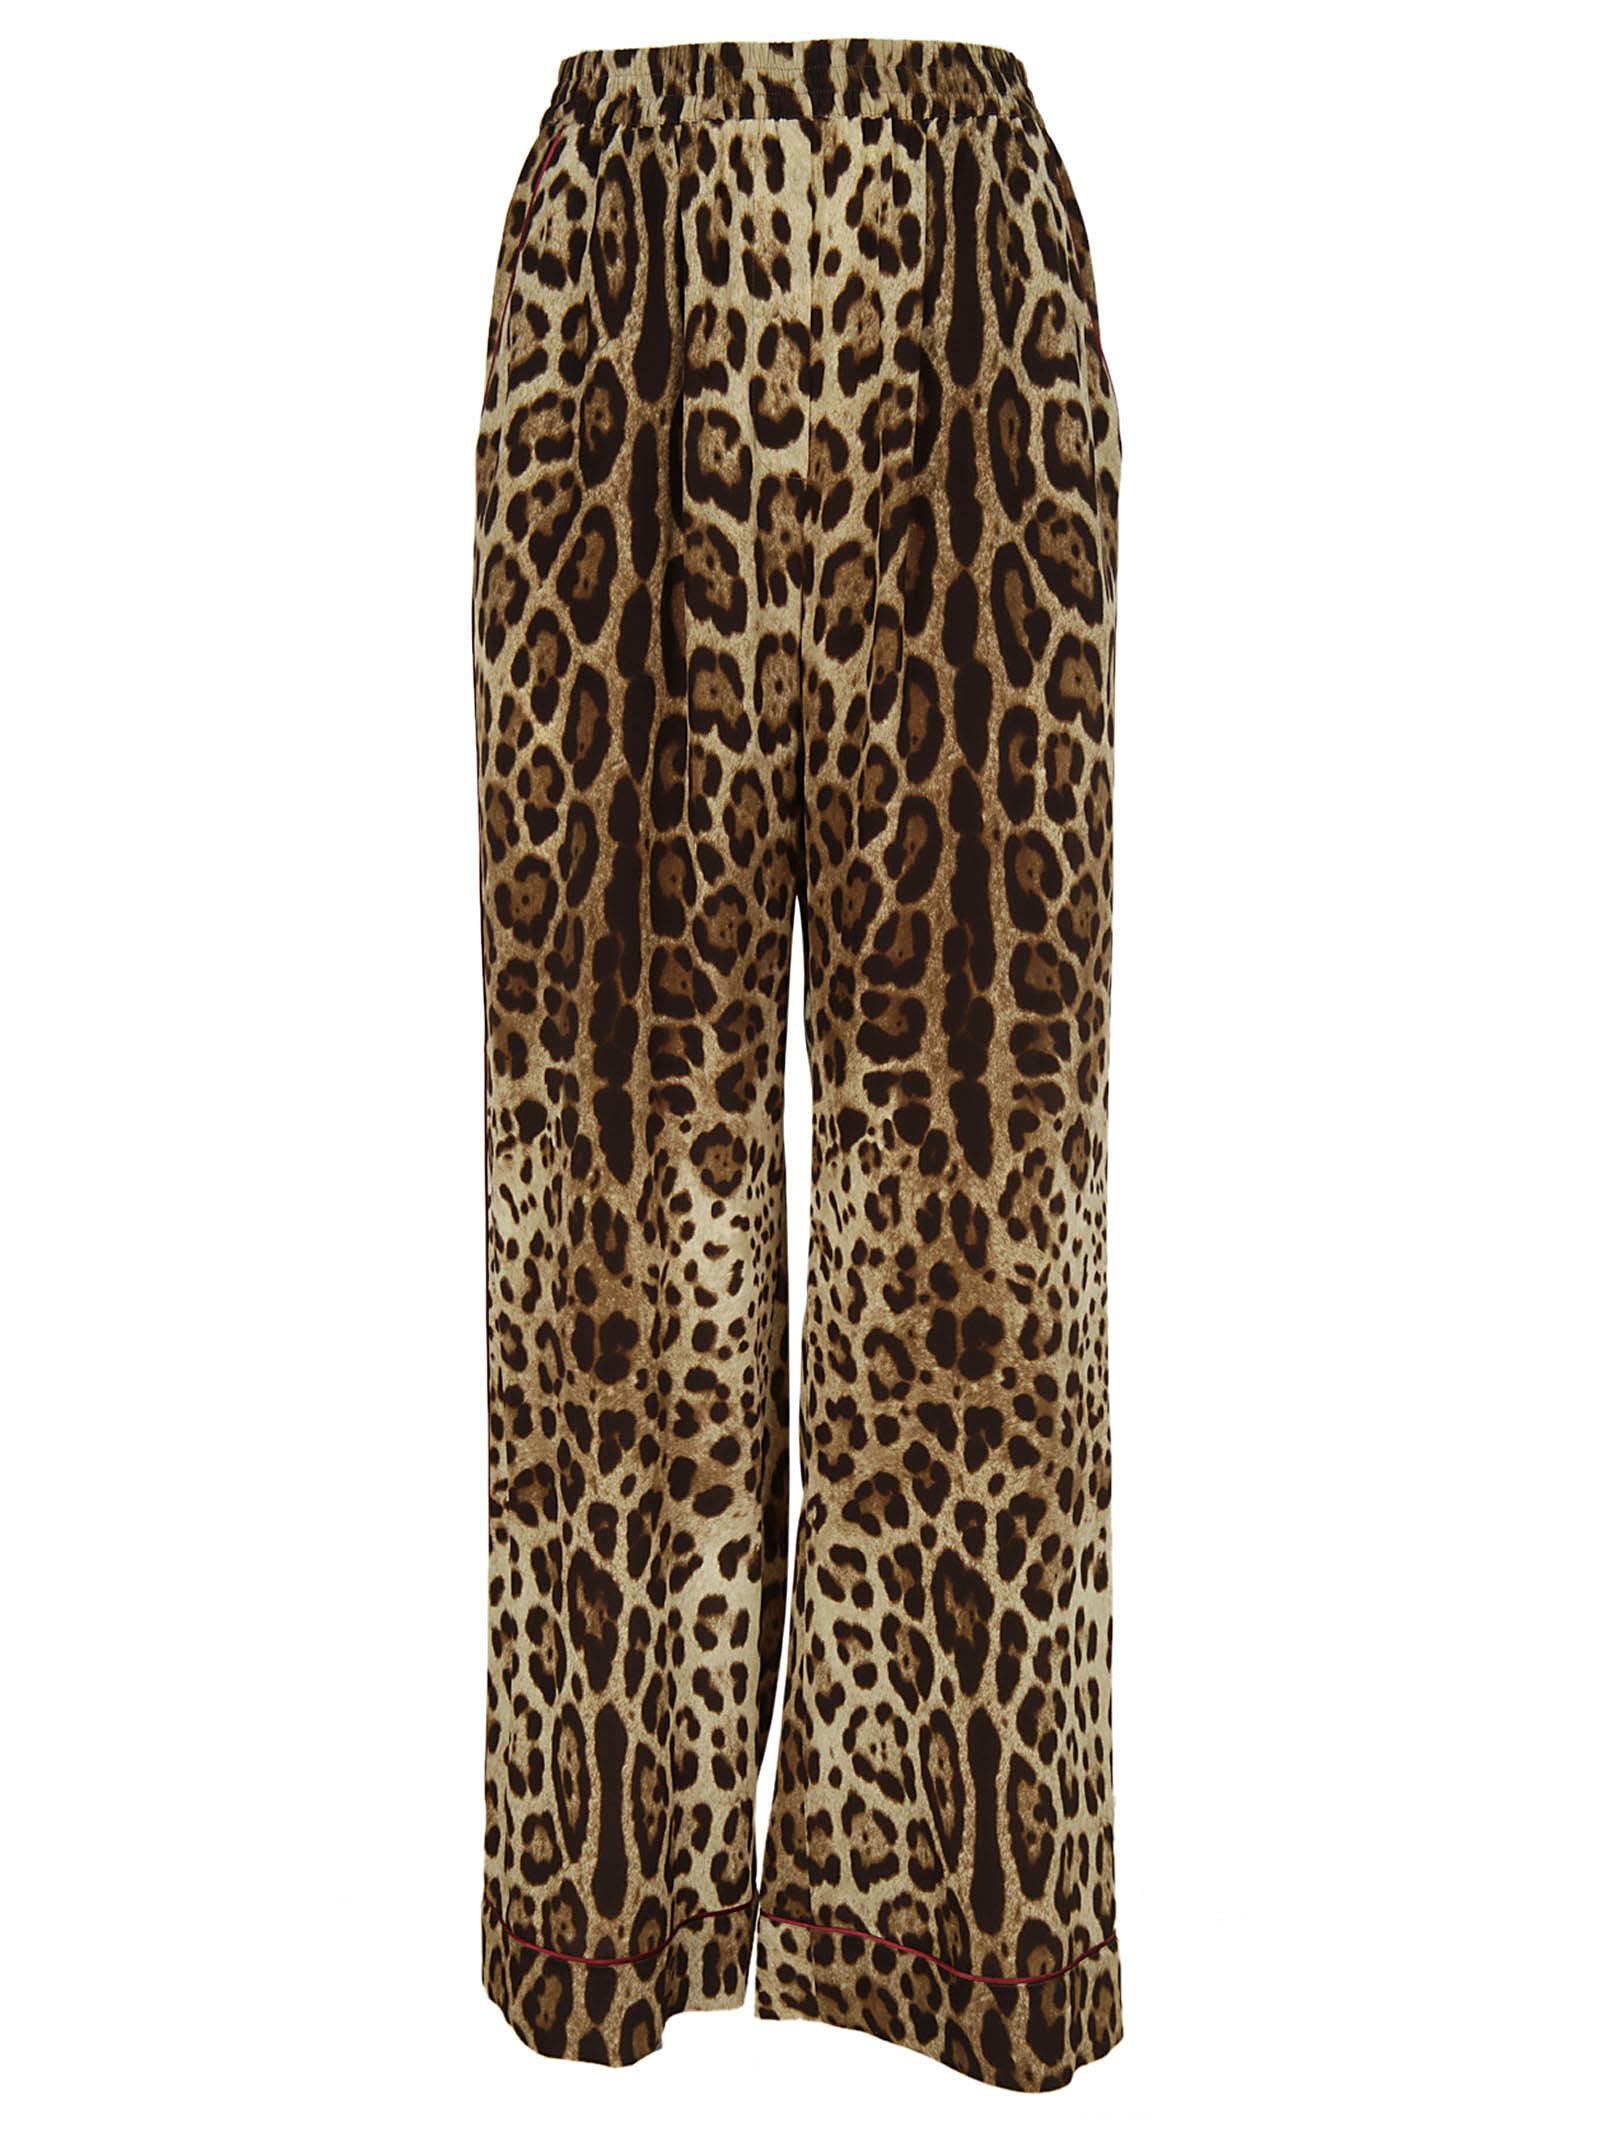 Dolce & Gabbana - Dolce & Gabbana Leopard Print Trousers - Leopardato ...